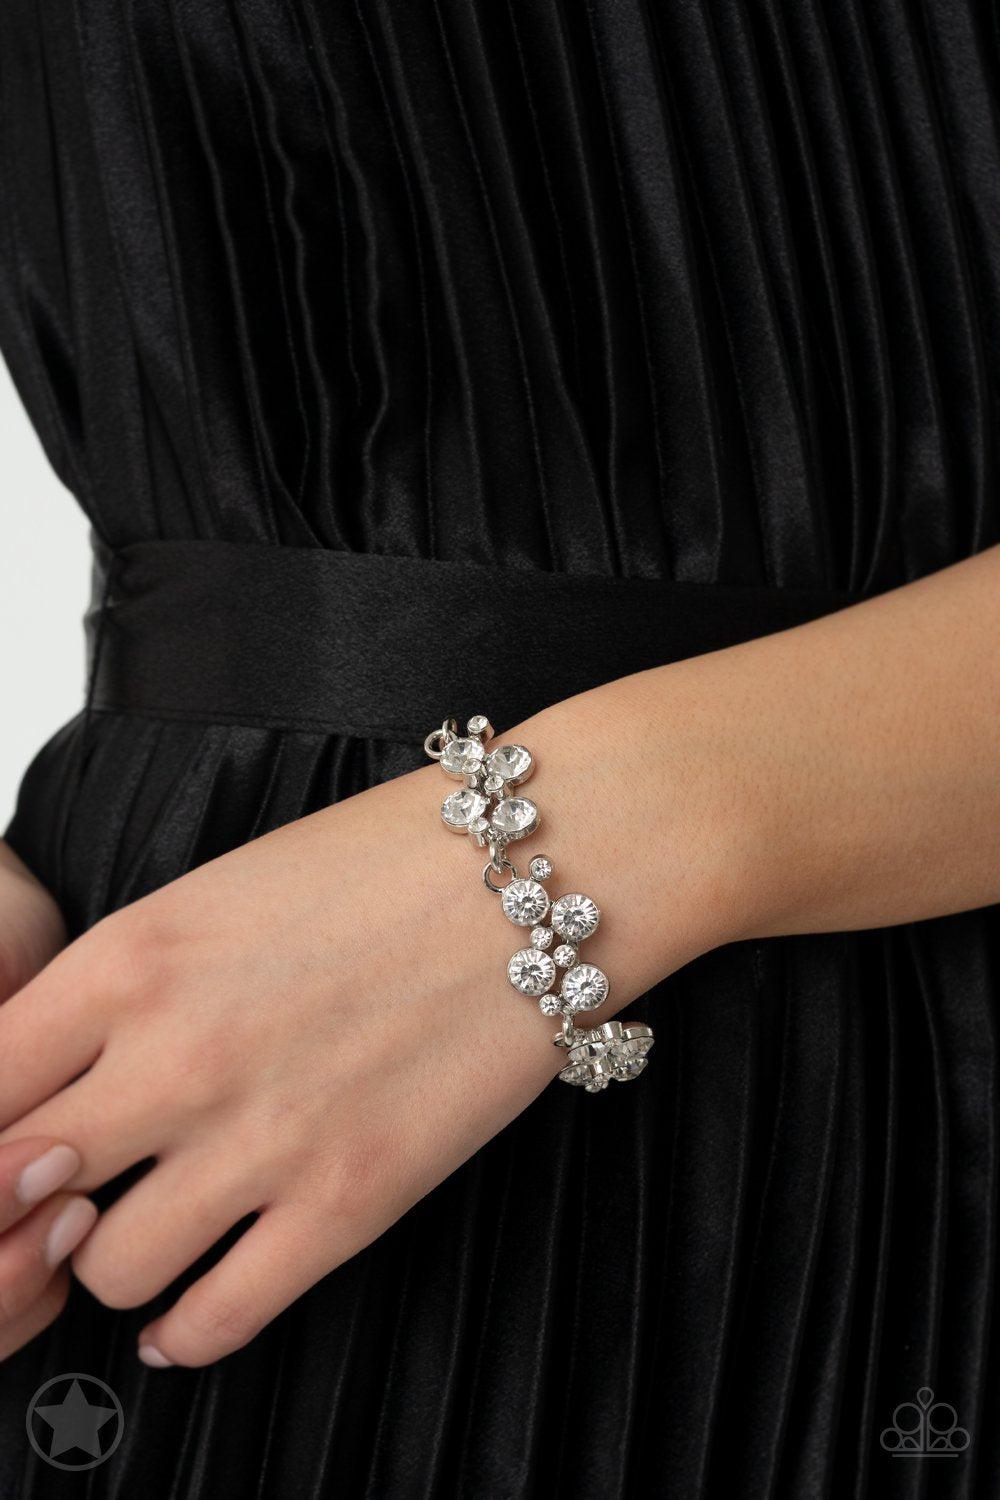 Old Hollywood White Rhinestone Bracelet - Paparazzi Accessories - model -CarasShop.com - $5 Jewelry by Cara Jewels